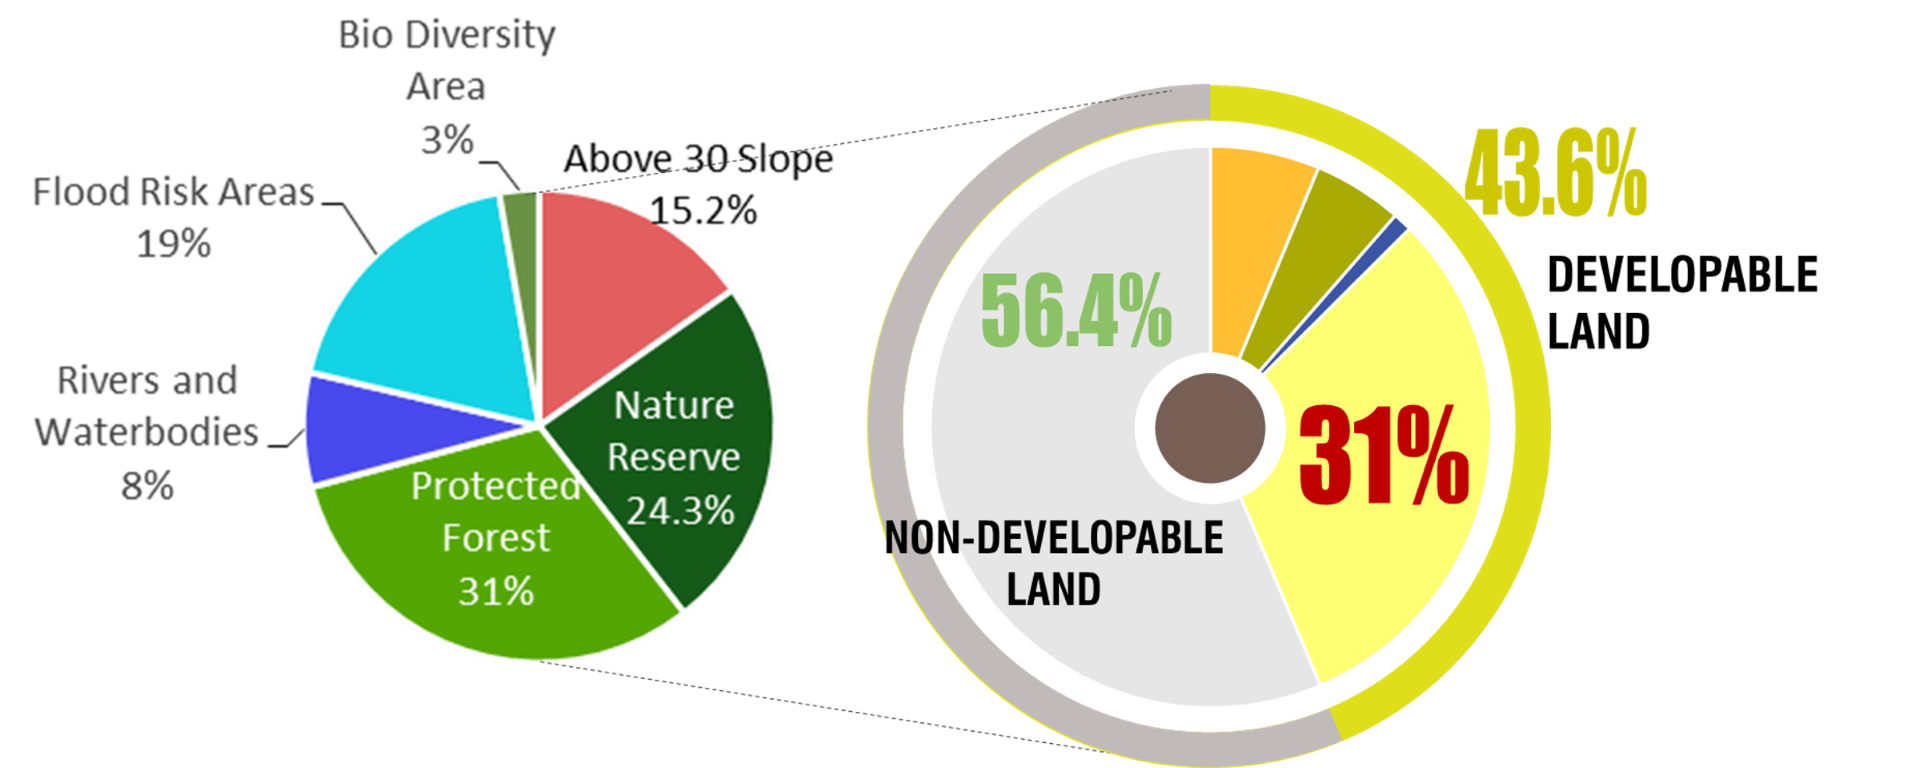 03 QT Land Developability Distribution Chart Large